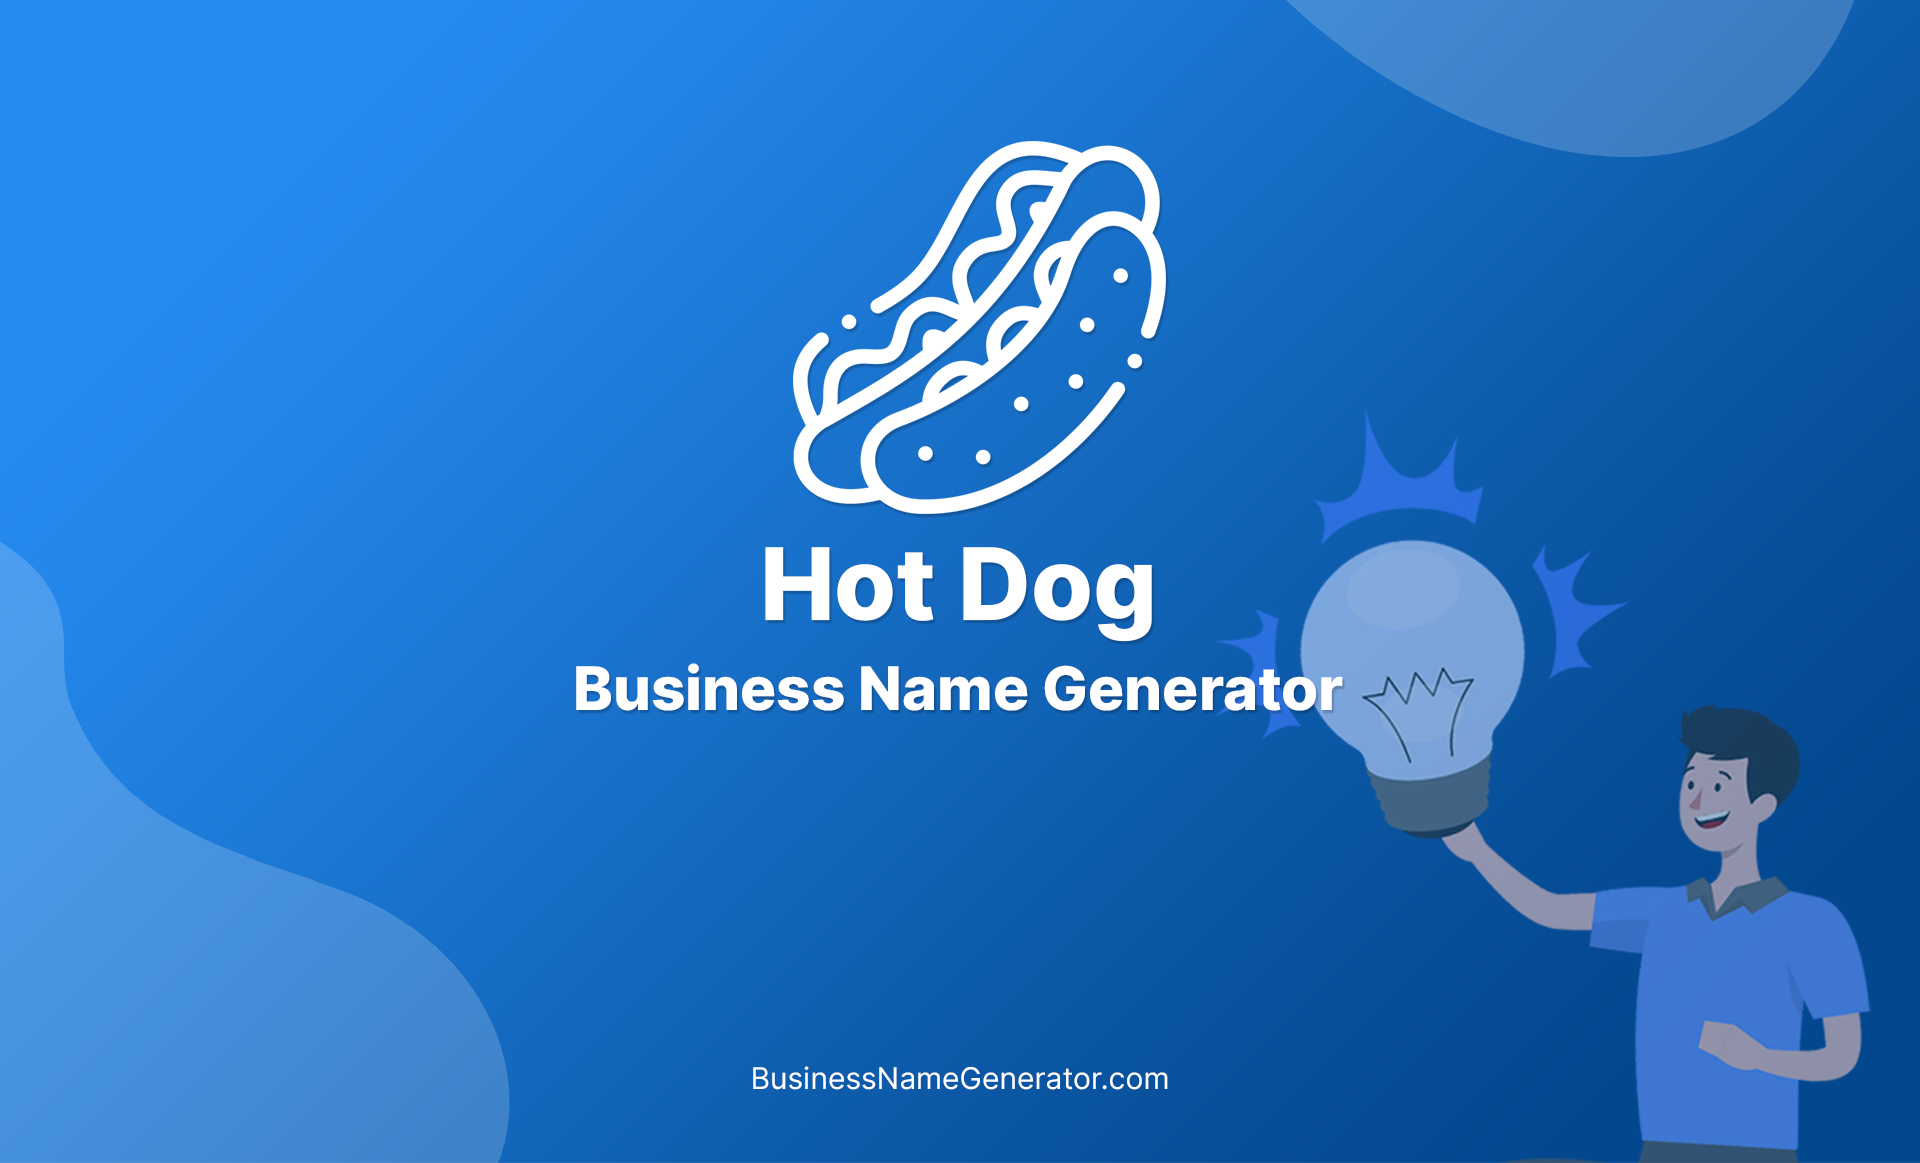 Hot Dog Business Name Generator